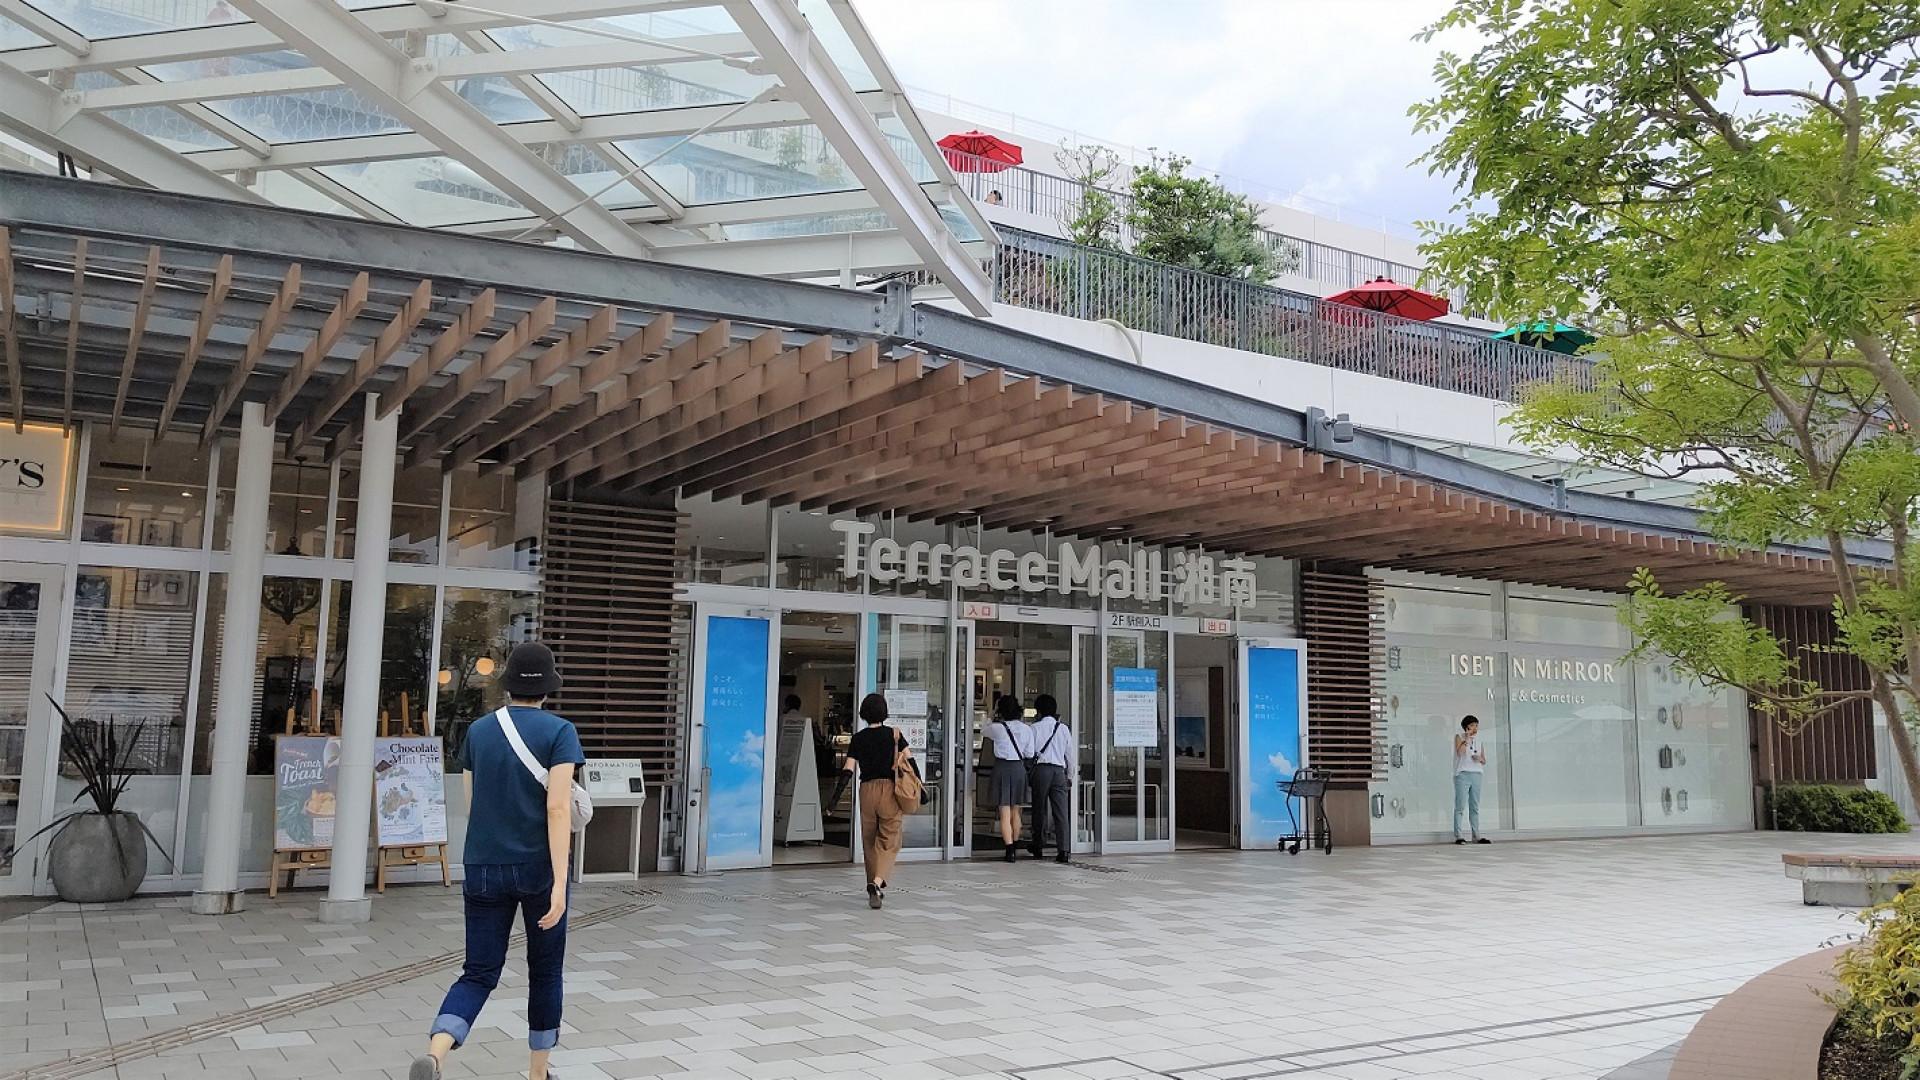 Terrace Mall 湘南